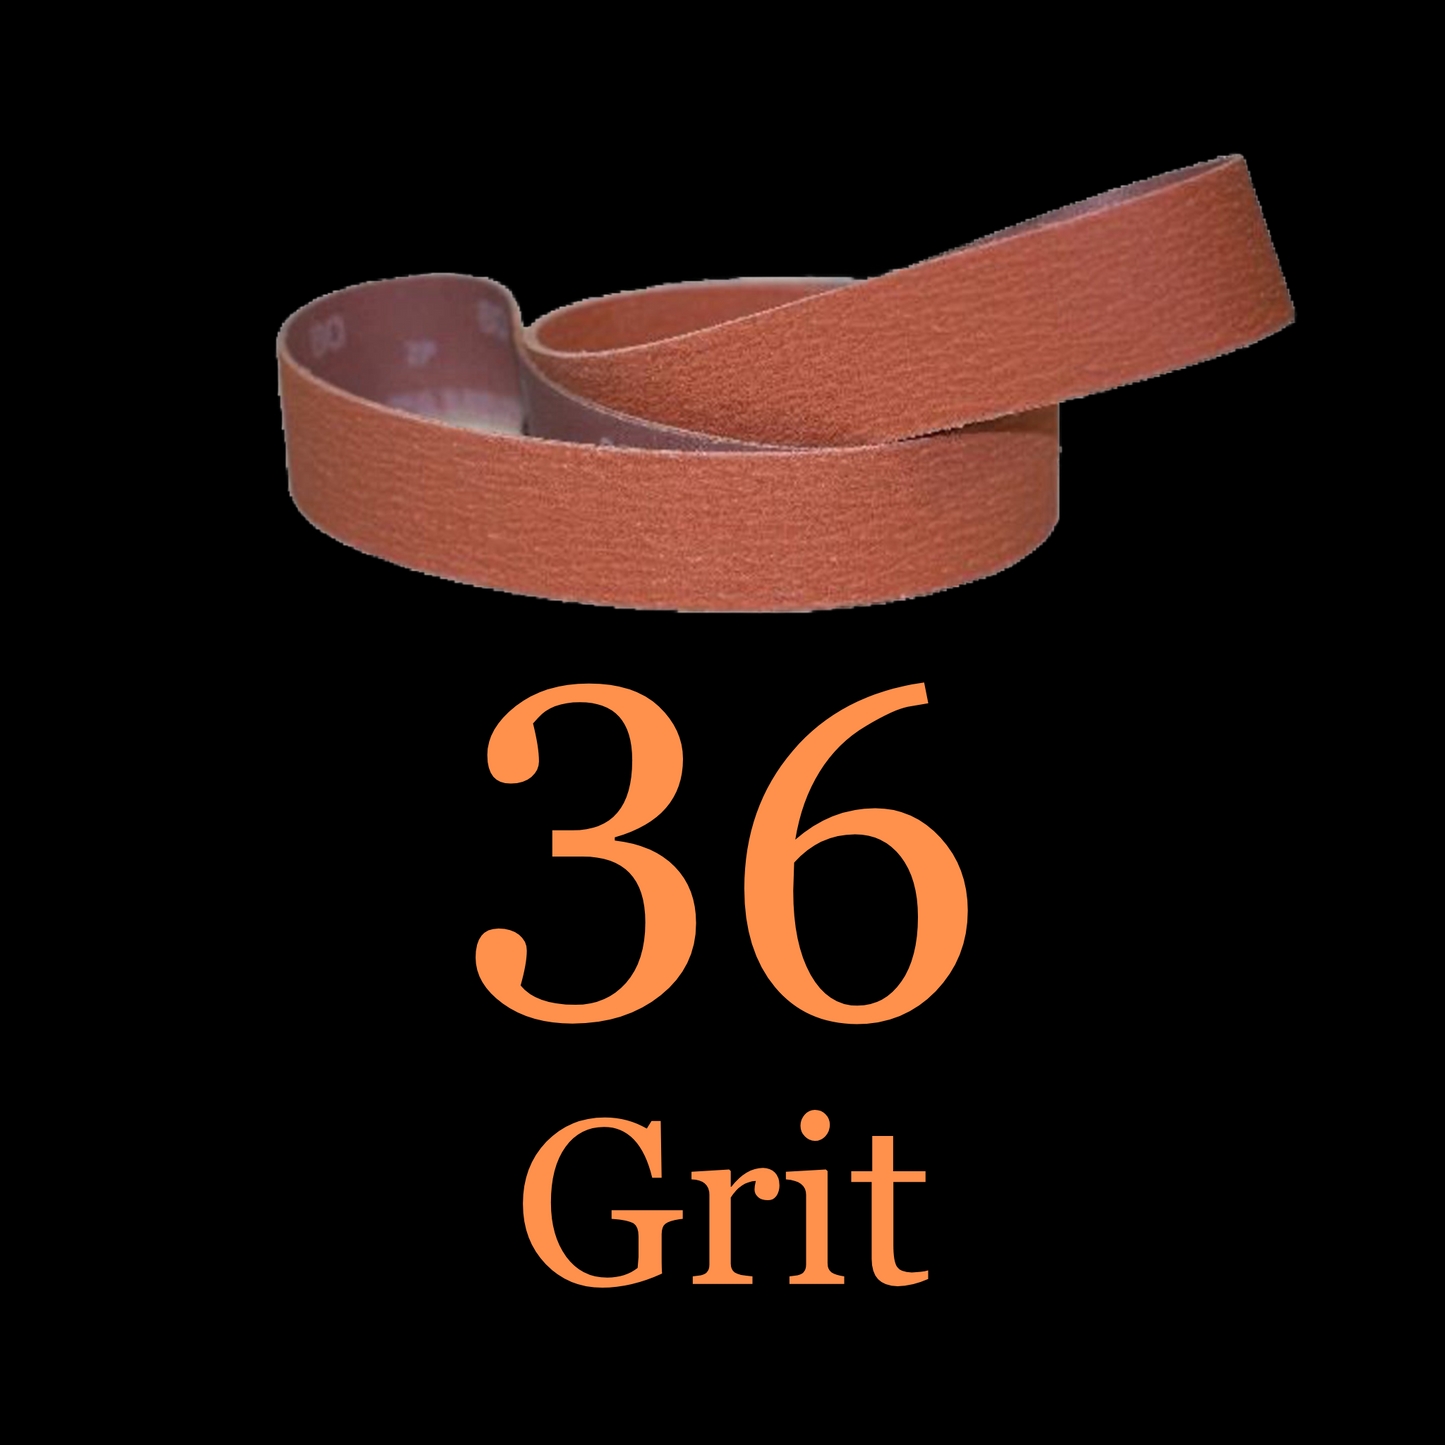 4” x 36” Blaze Ceramic Belt 36 Grit